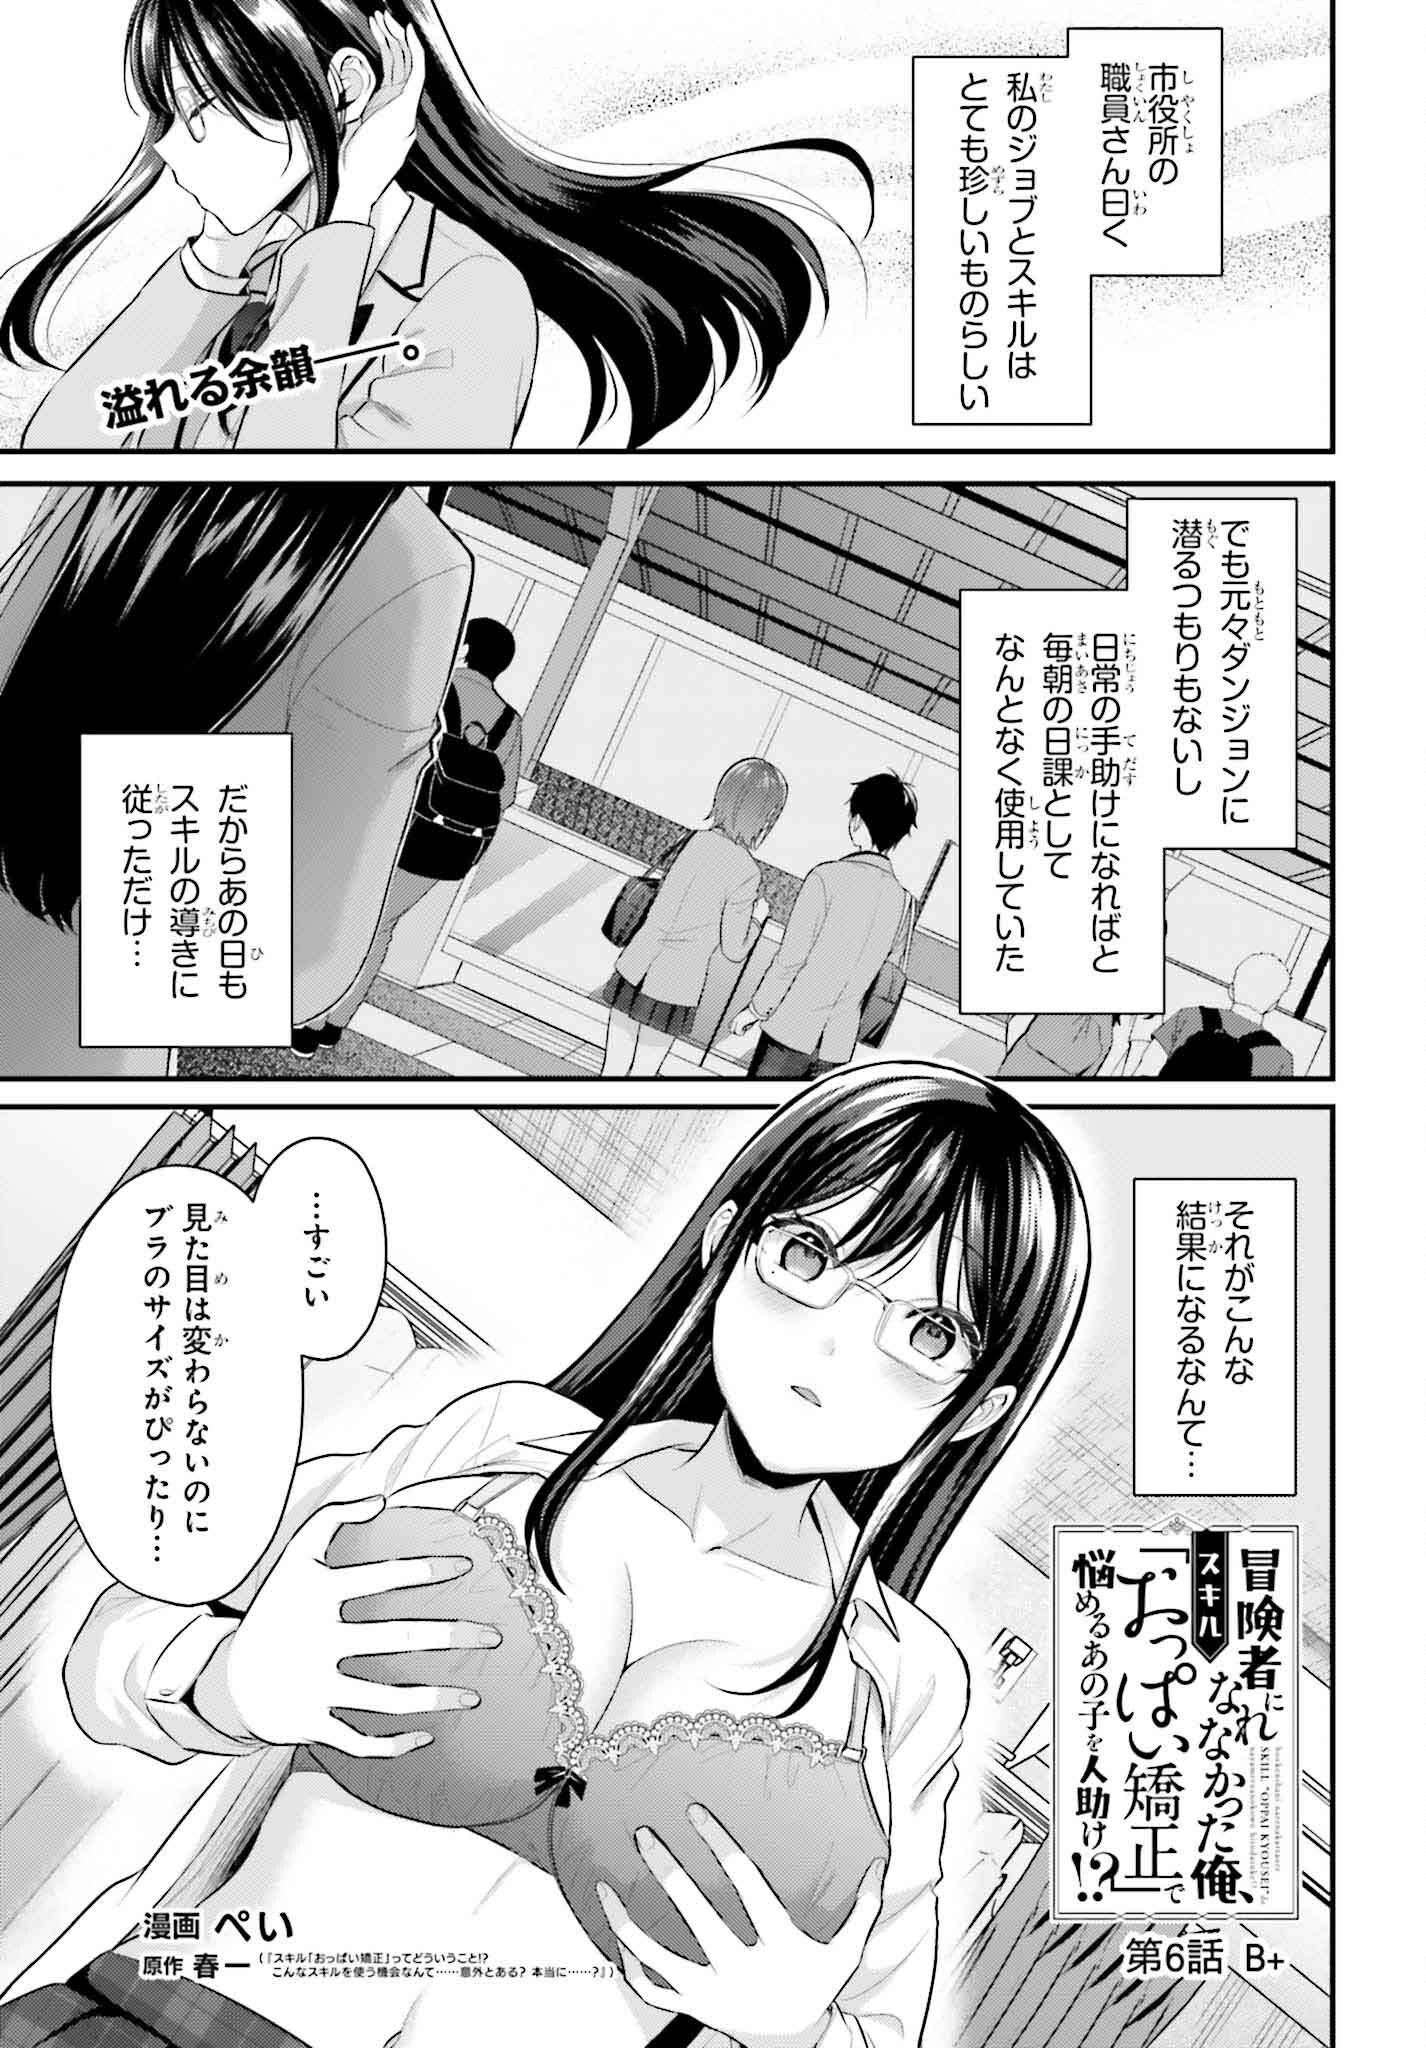 Boukensha ni Nare Nakatta Ore, Skill Oppai Kyousei de Nayameru Ano Ko wo Hito Dasuke!? - Chapter 6 - Page 1